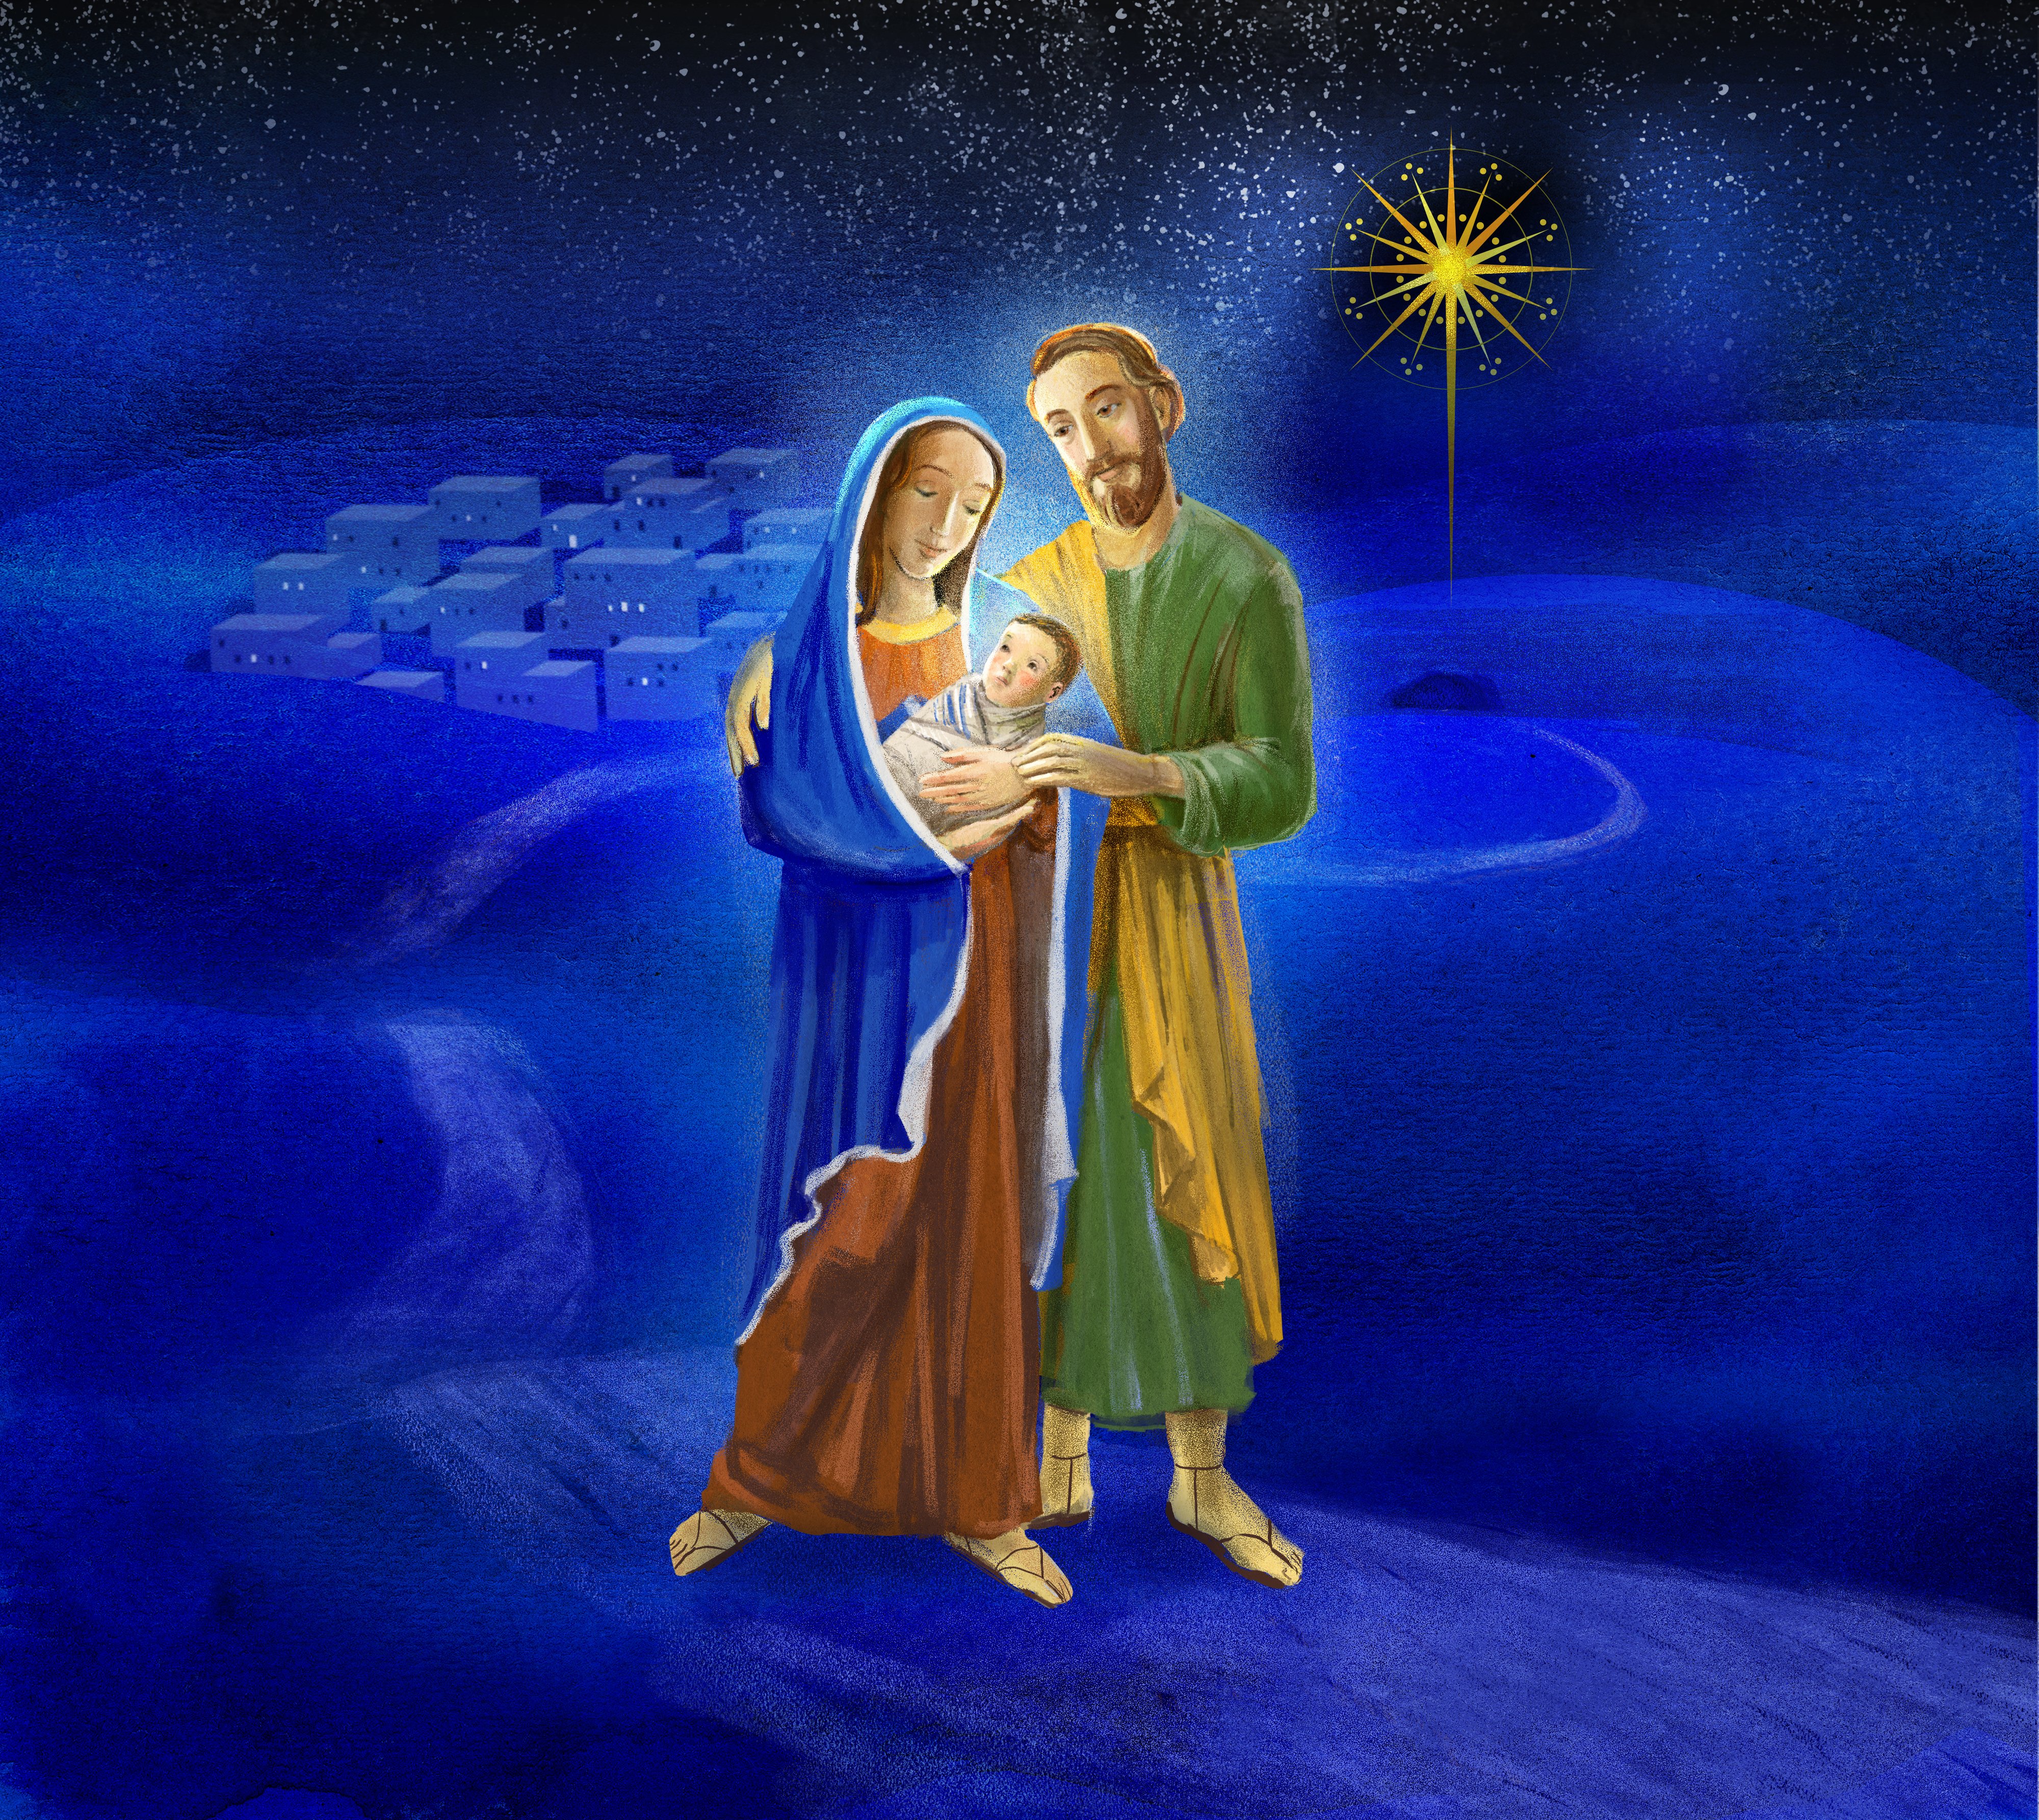 Go to Joseph: The Nativity